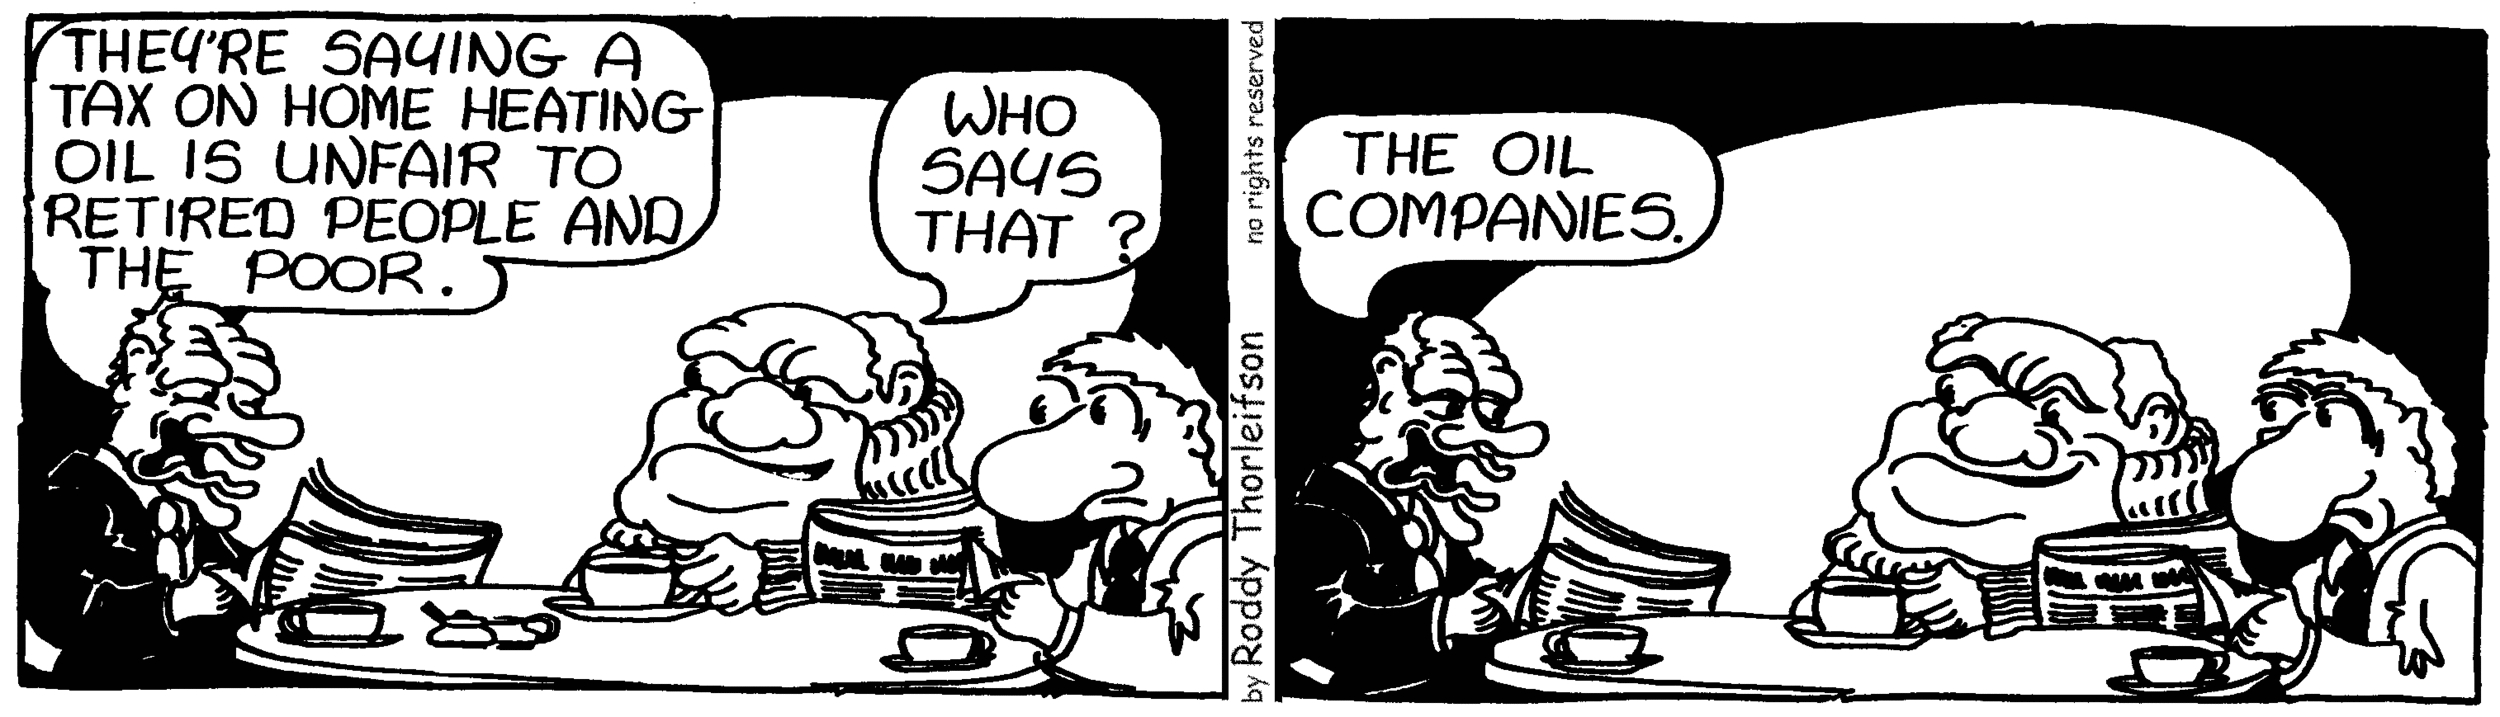 free cartoon environment environmentalism conservation oil companies